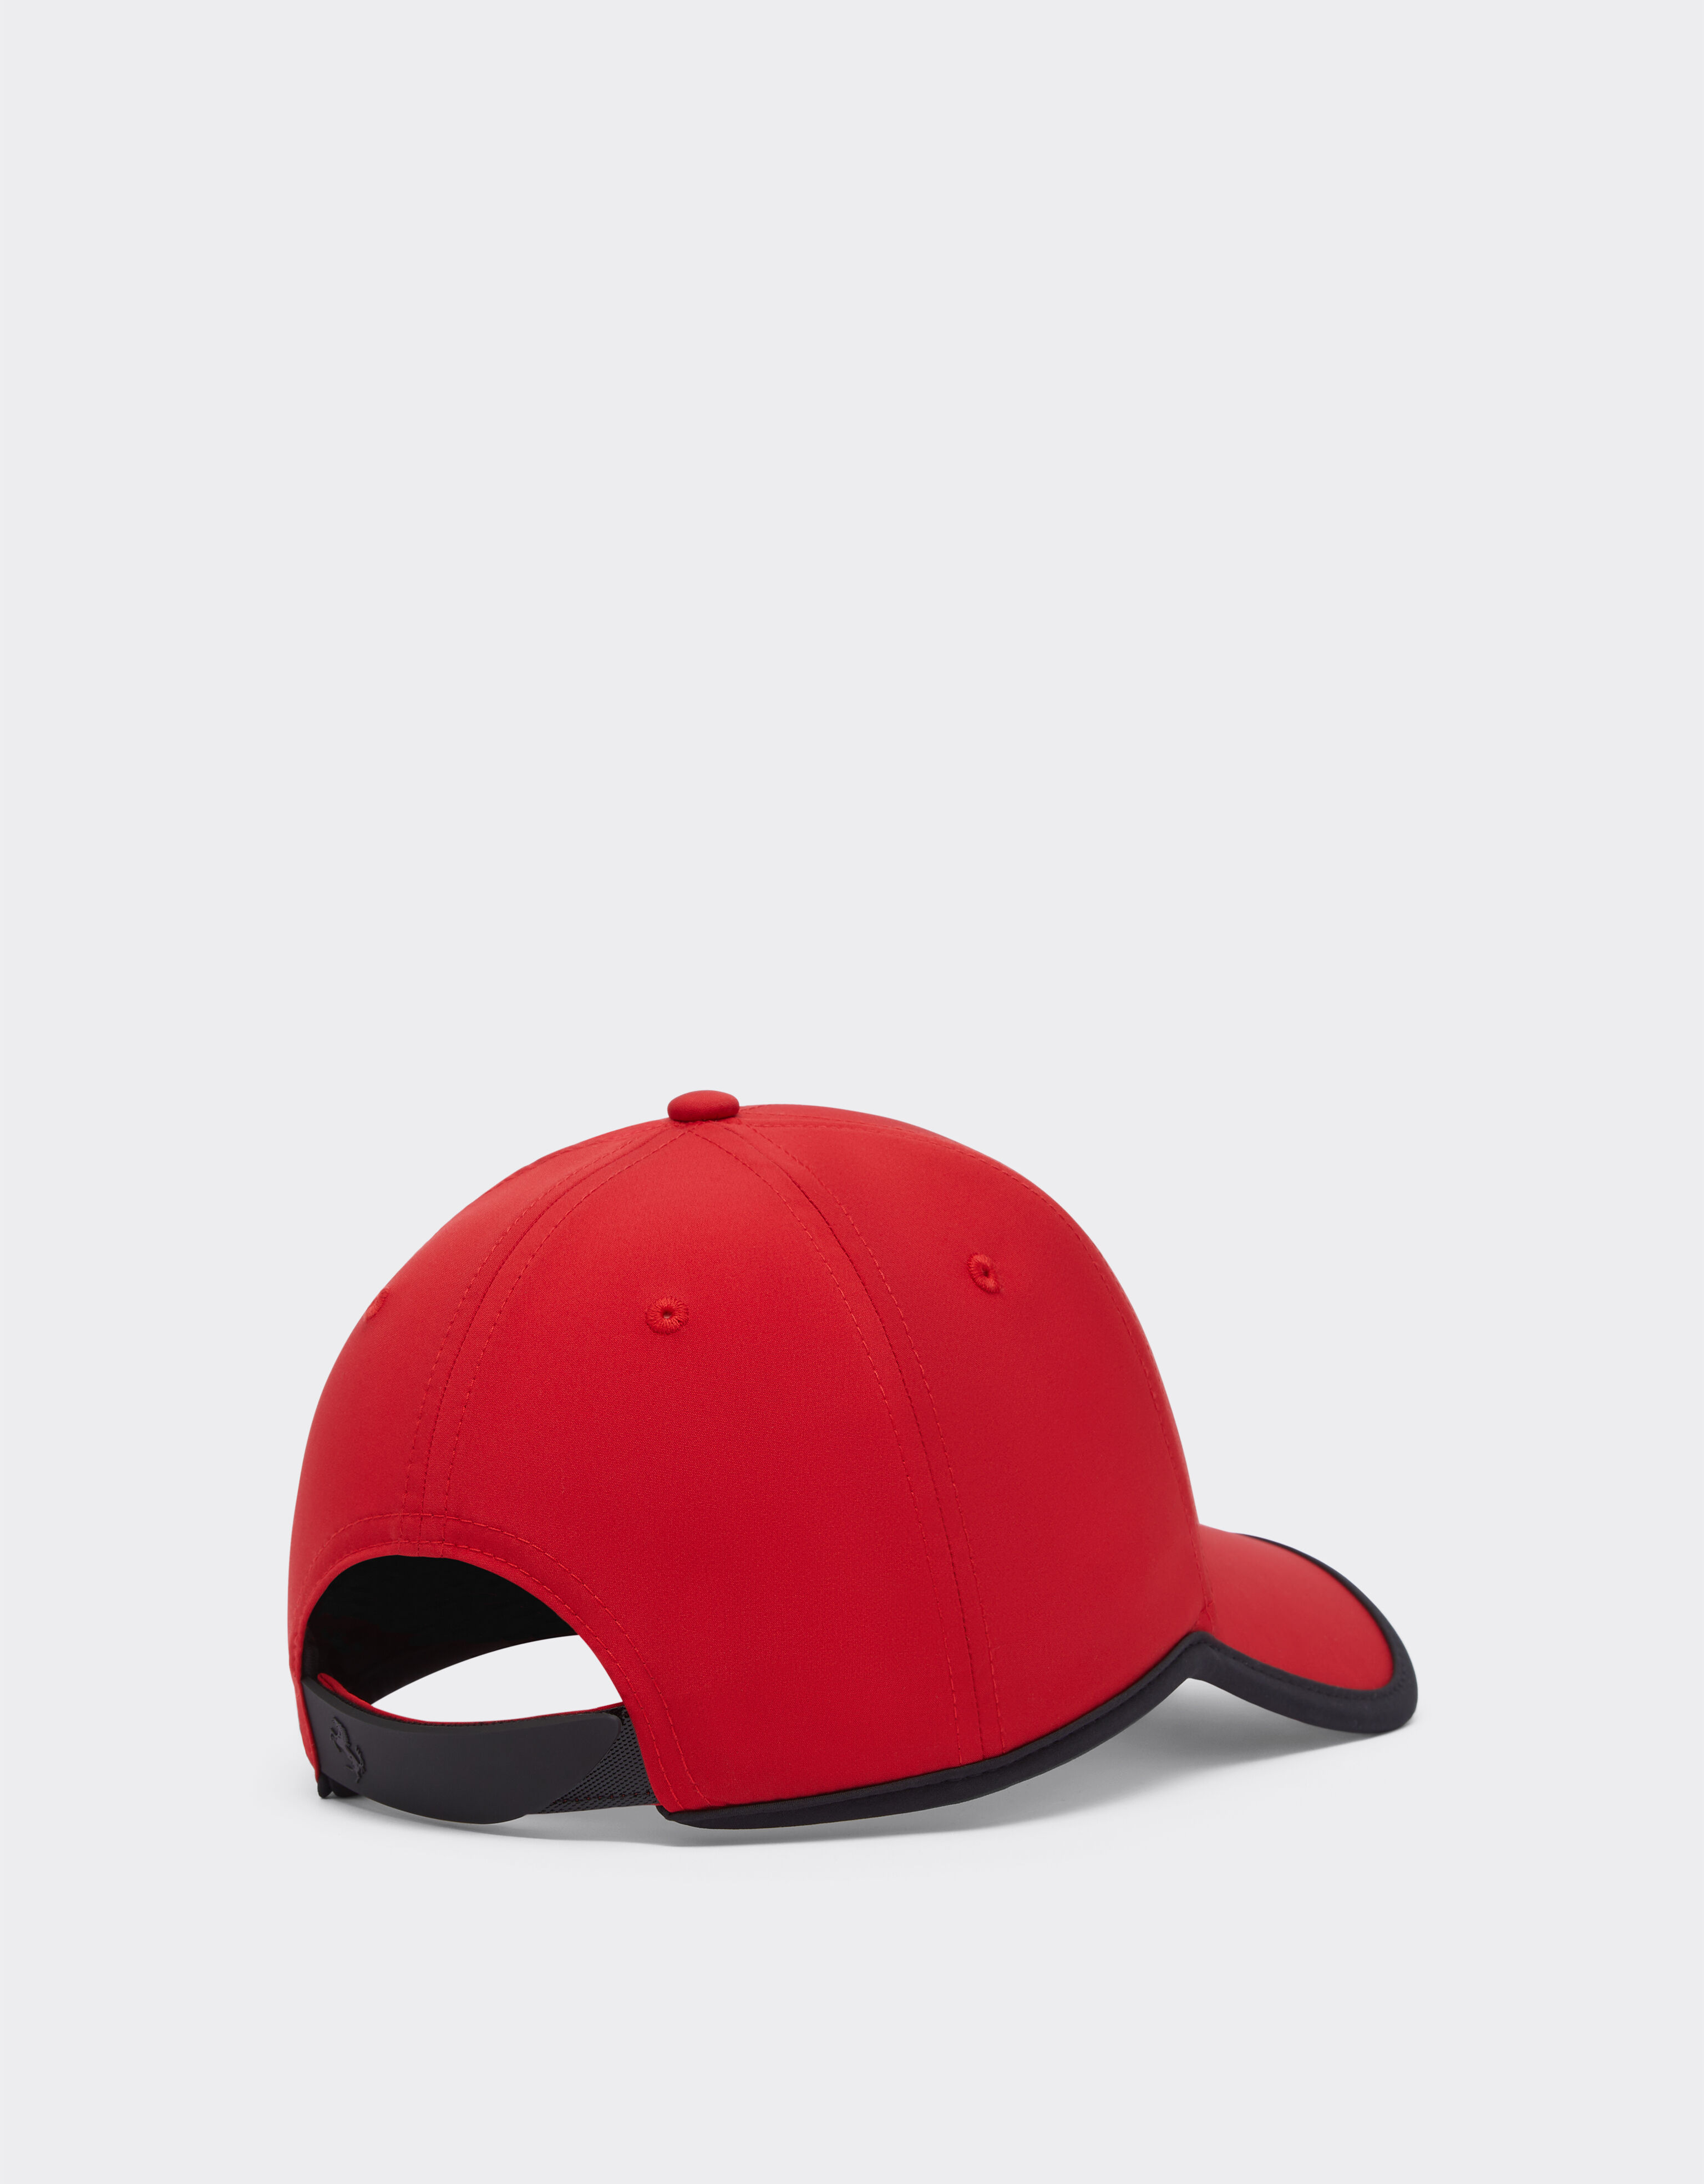 Ferrari Junior baseball hat with Prancing Horse detail Rosso Corsa 20274fK